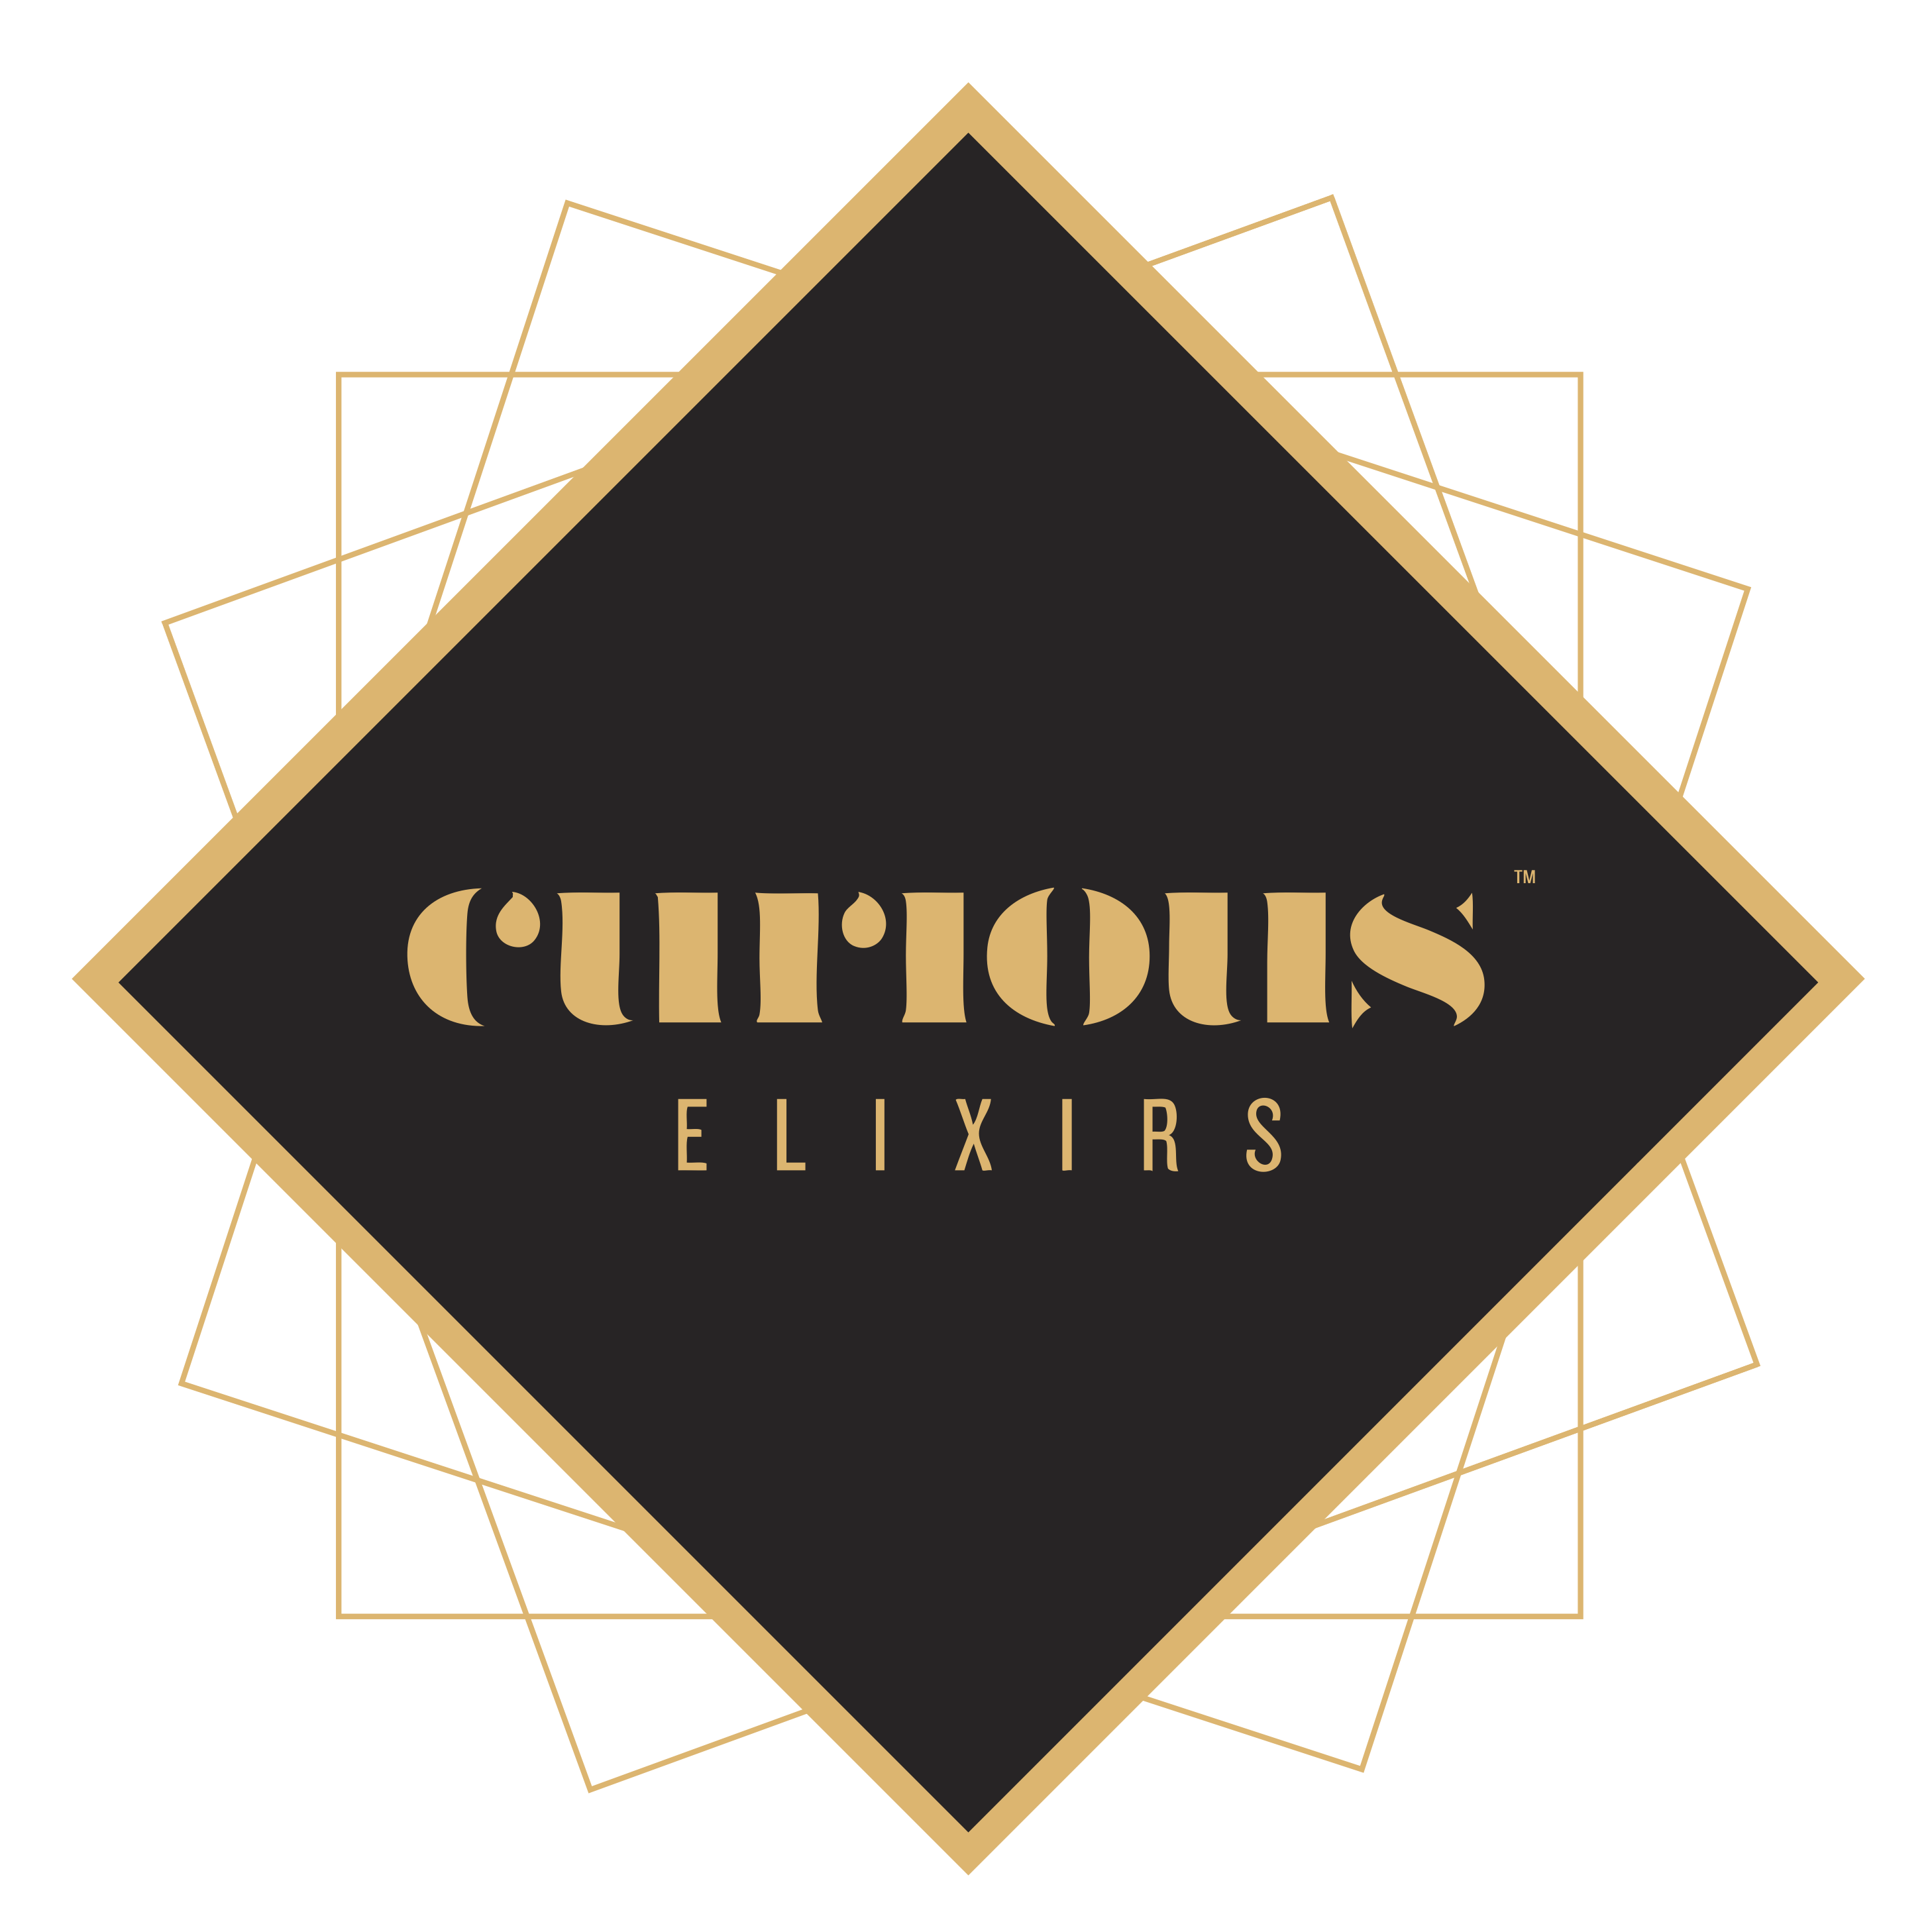 Curious Elixirs logo!